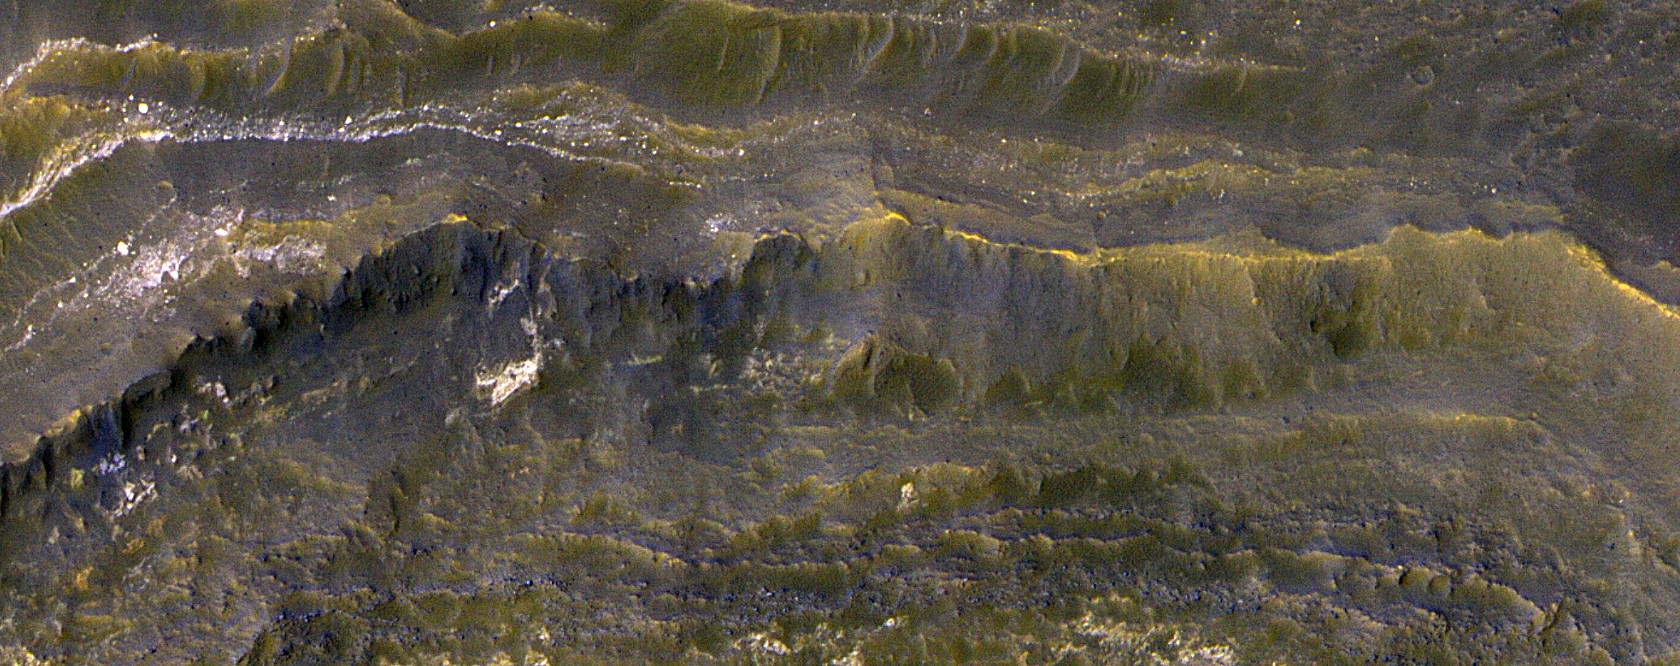 A Landslide Deposit in Melas Chasma